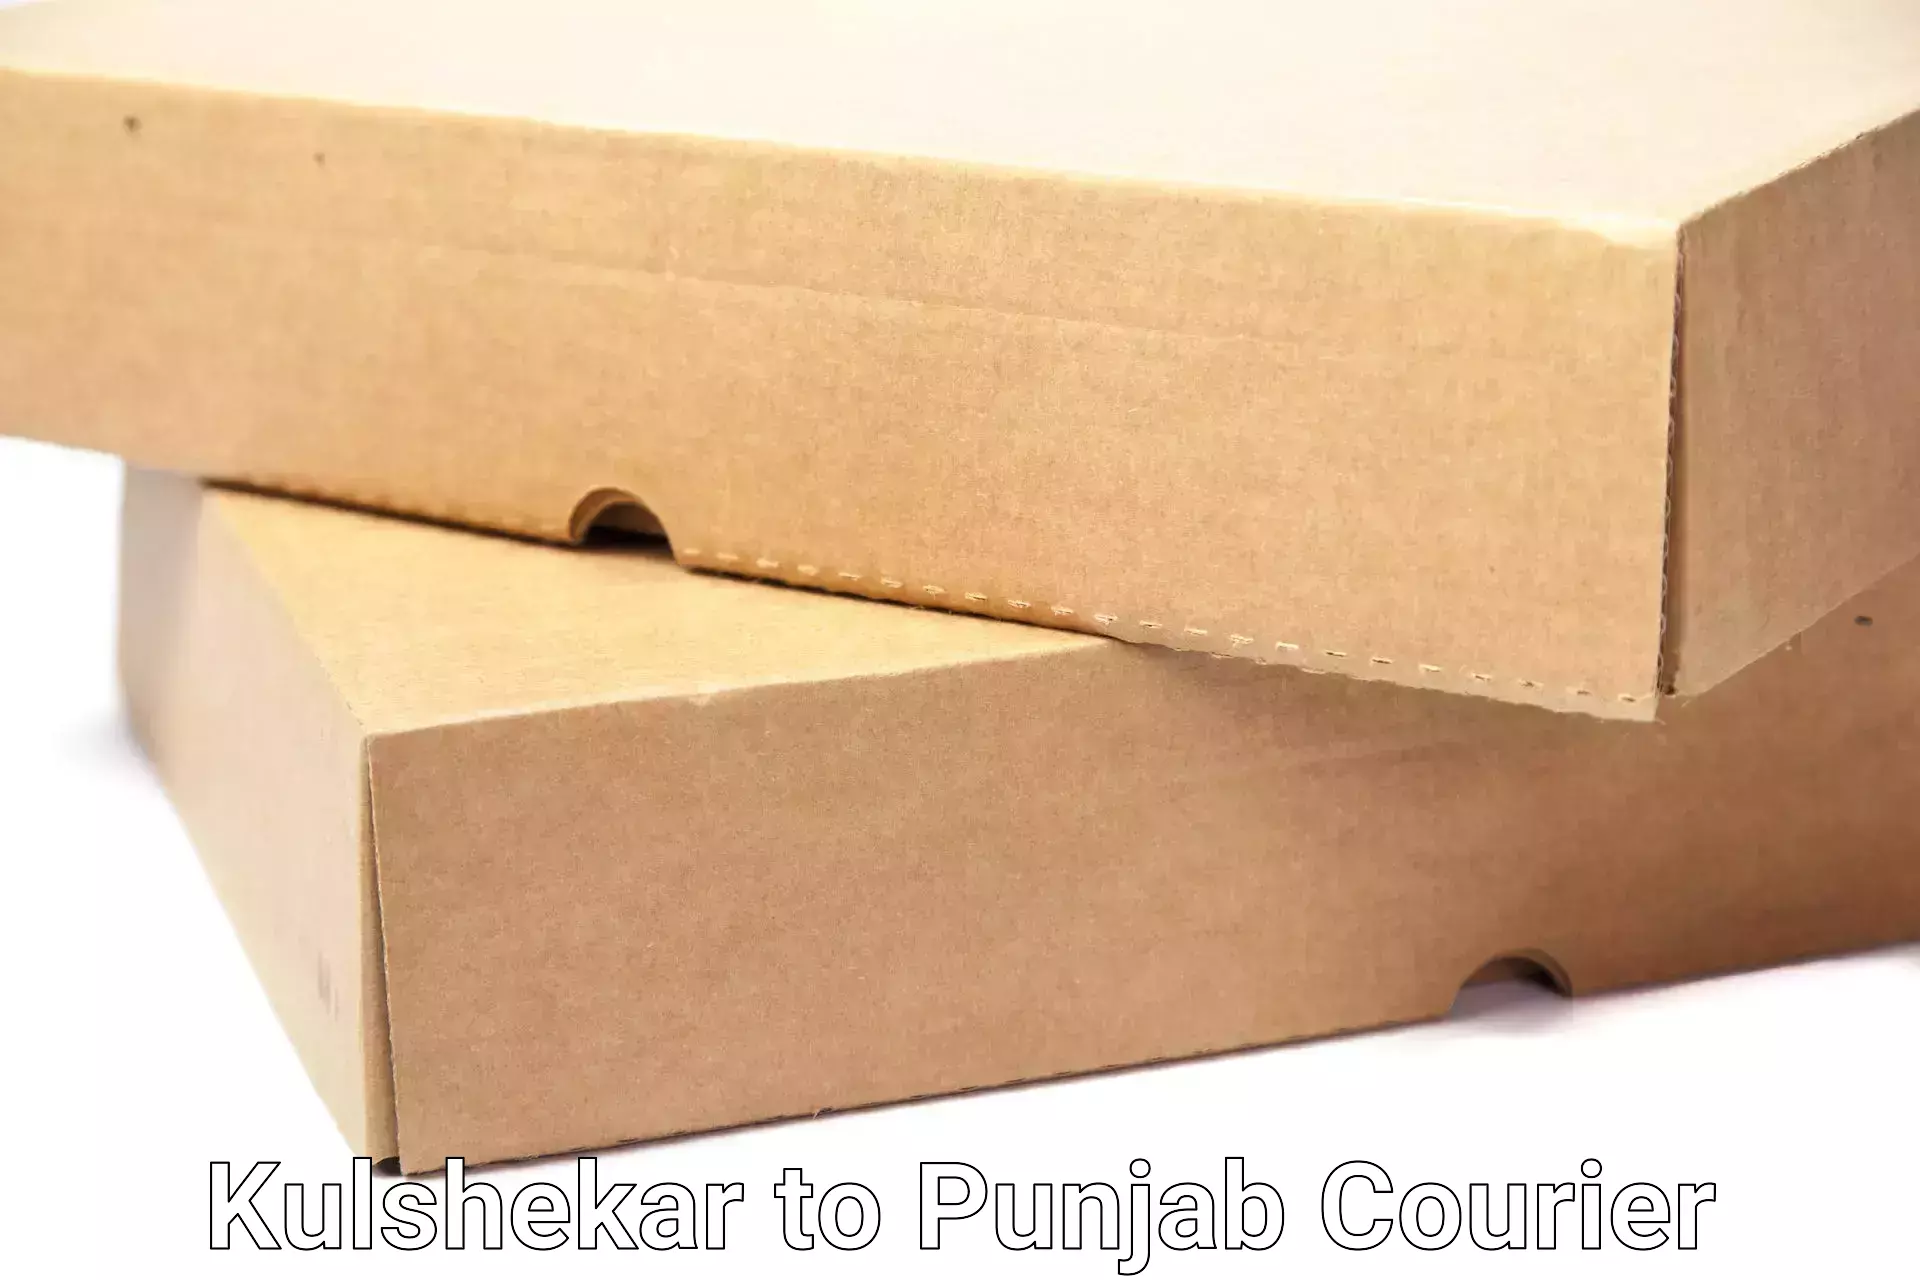 Full-service movers Kulshekar to Punjab